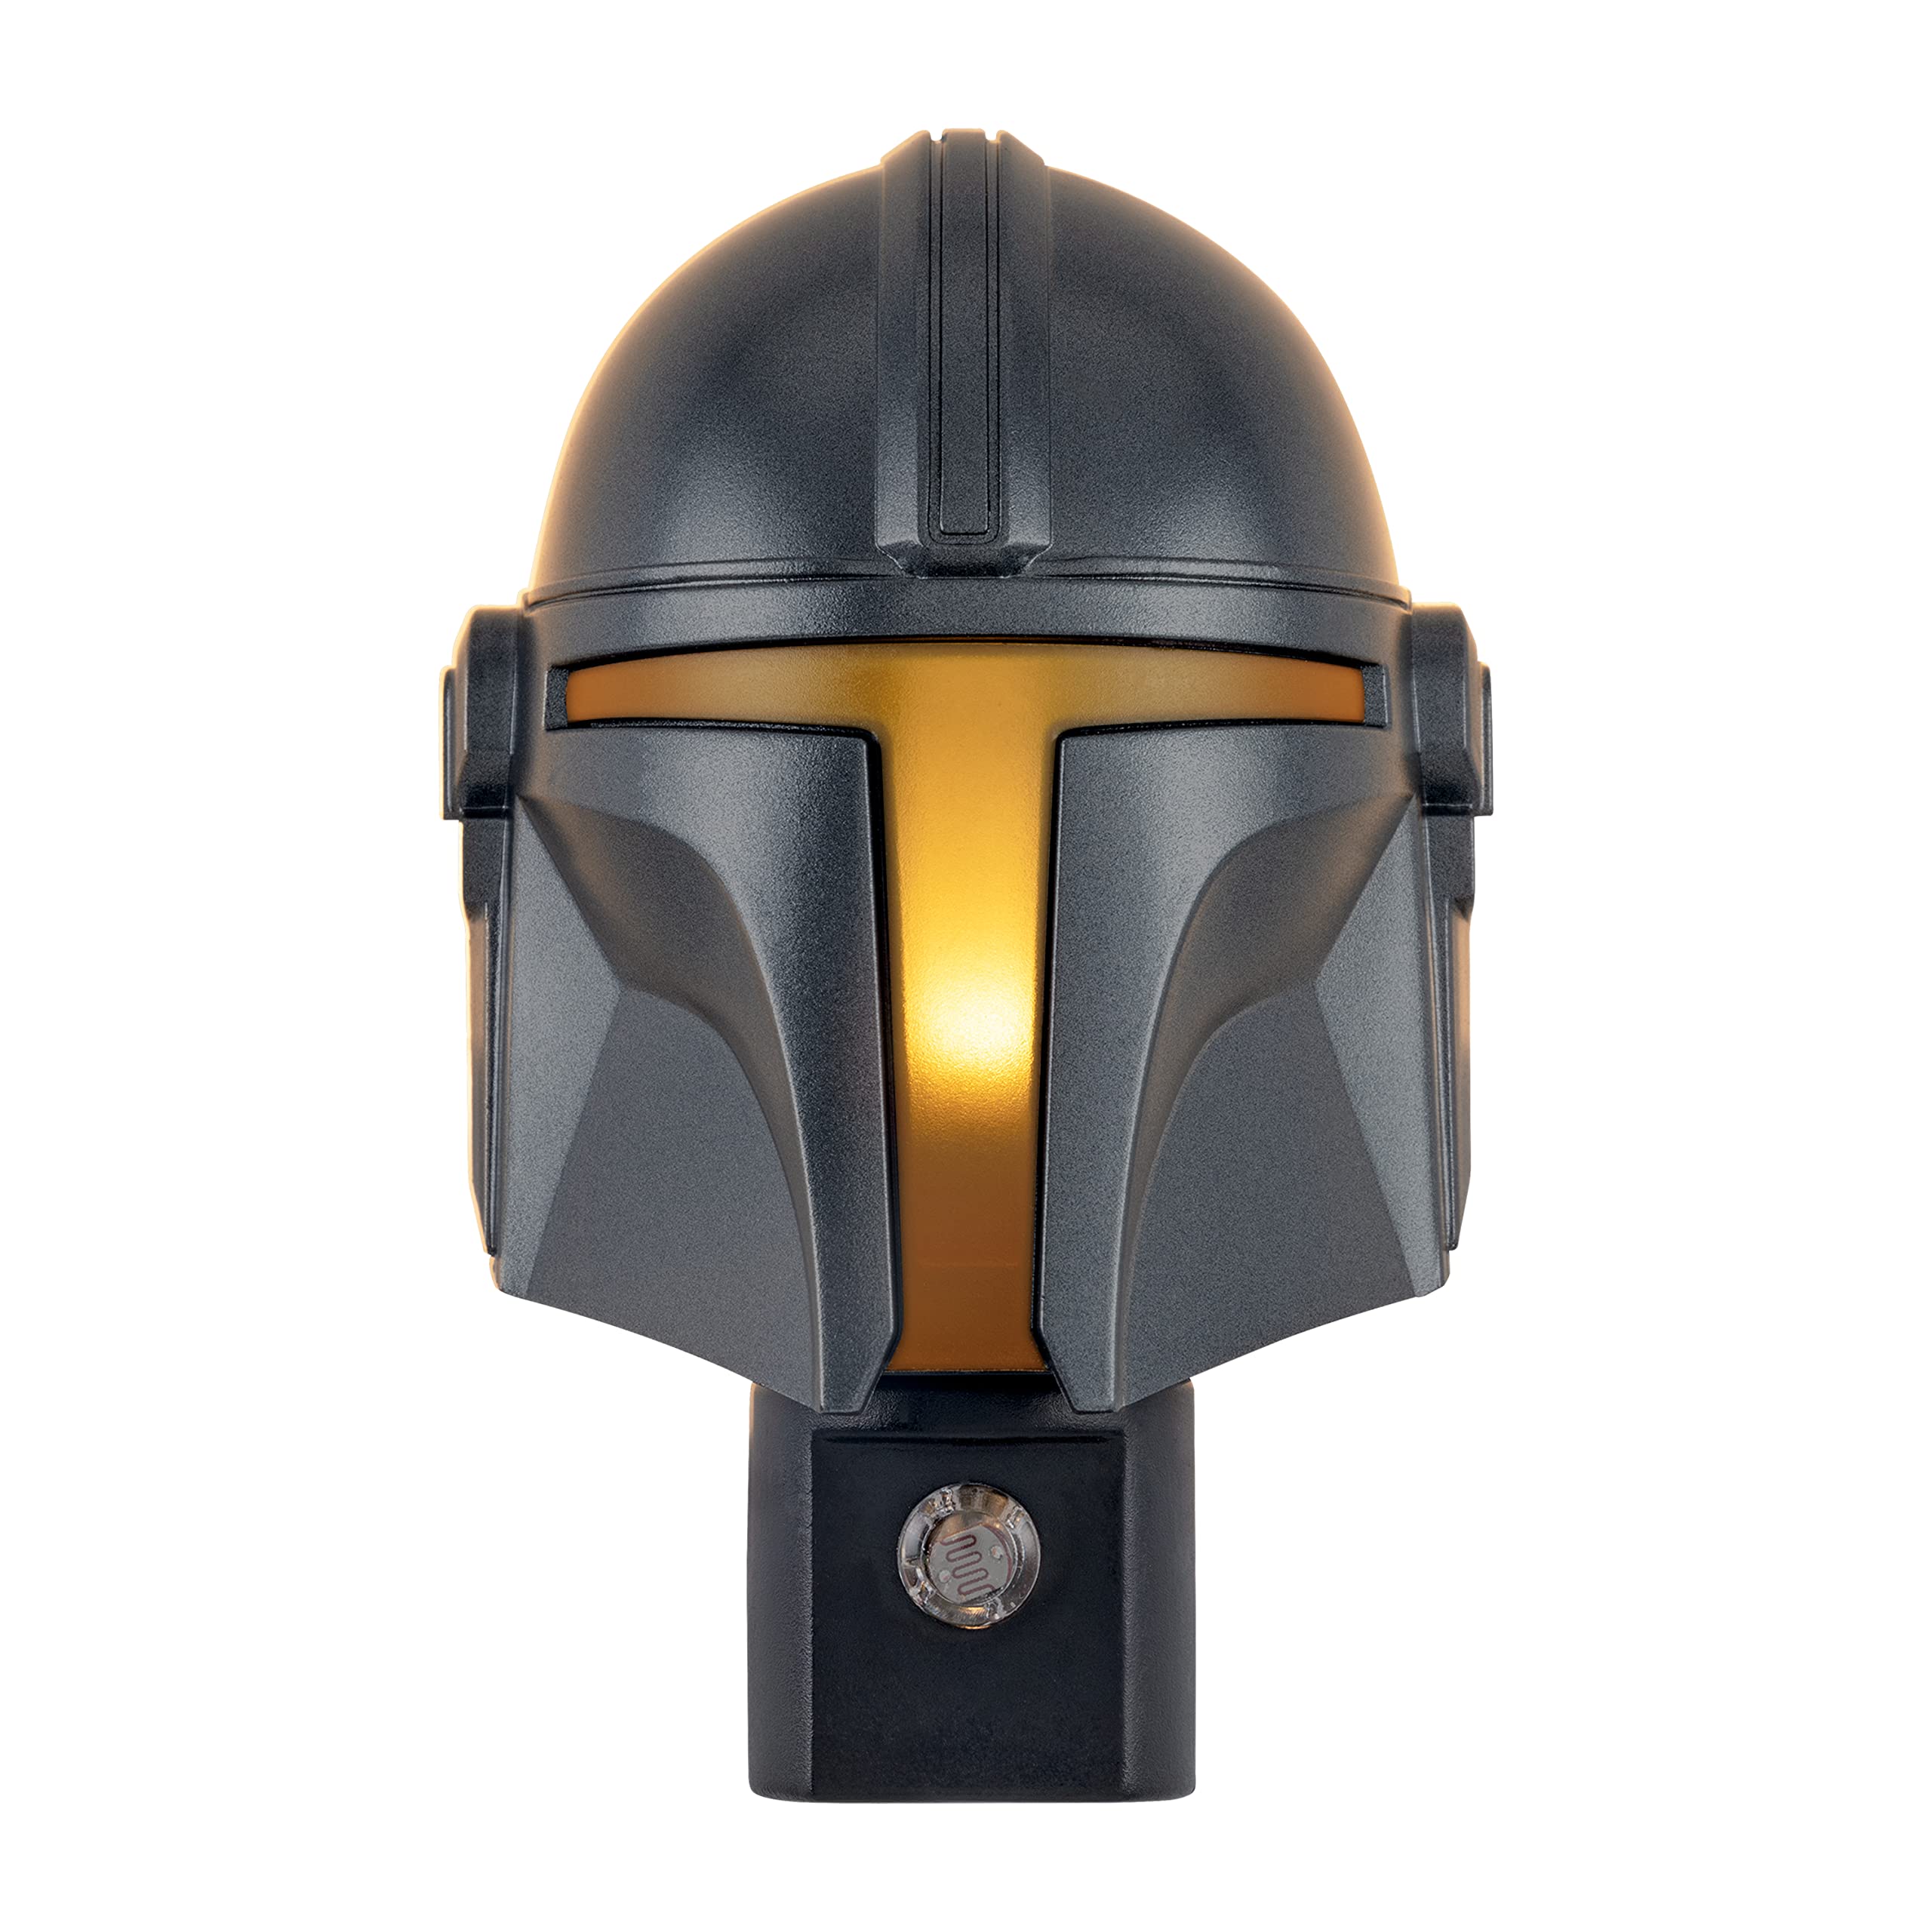 Star Wars The Mandalorian Helmet Dusk to Dawn Light-Sensing LED Night Light $6.20 + Free Shipping w/ Prime or on $35+